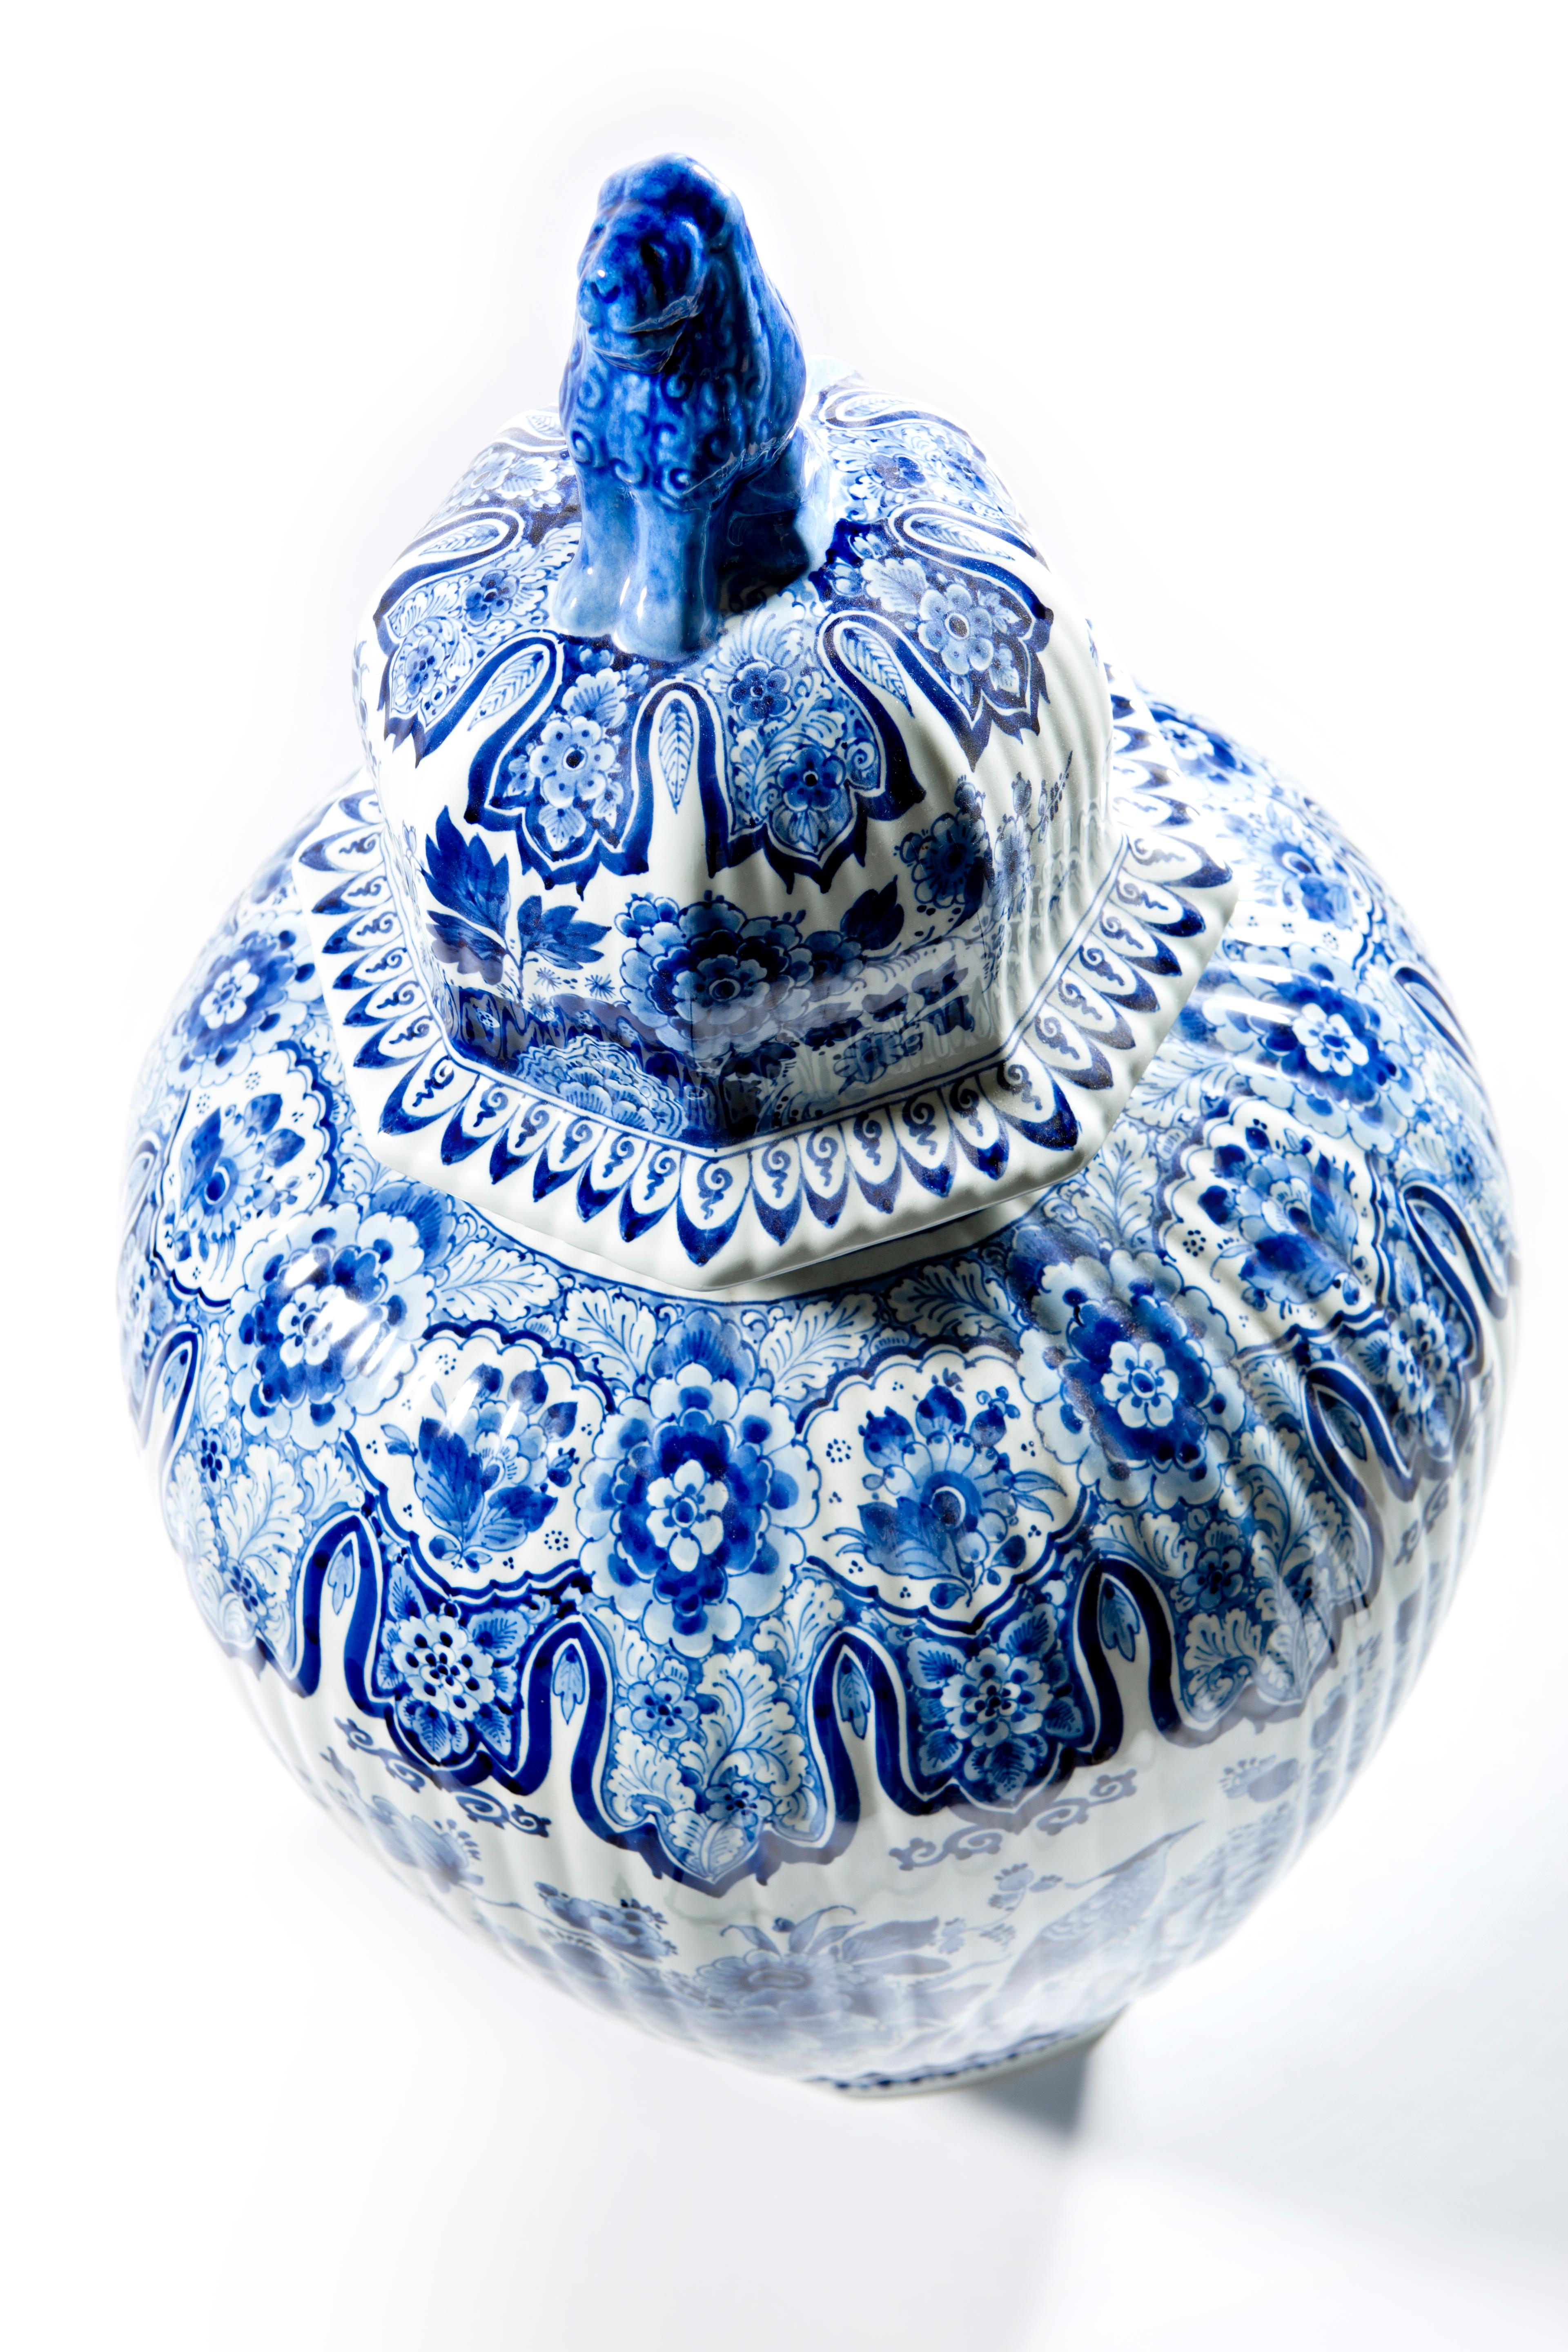 Baroque Dutch Delft Blue handpainted ceramic Jar with lid by Royal Delft, Original Blue  For Sale